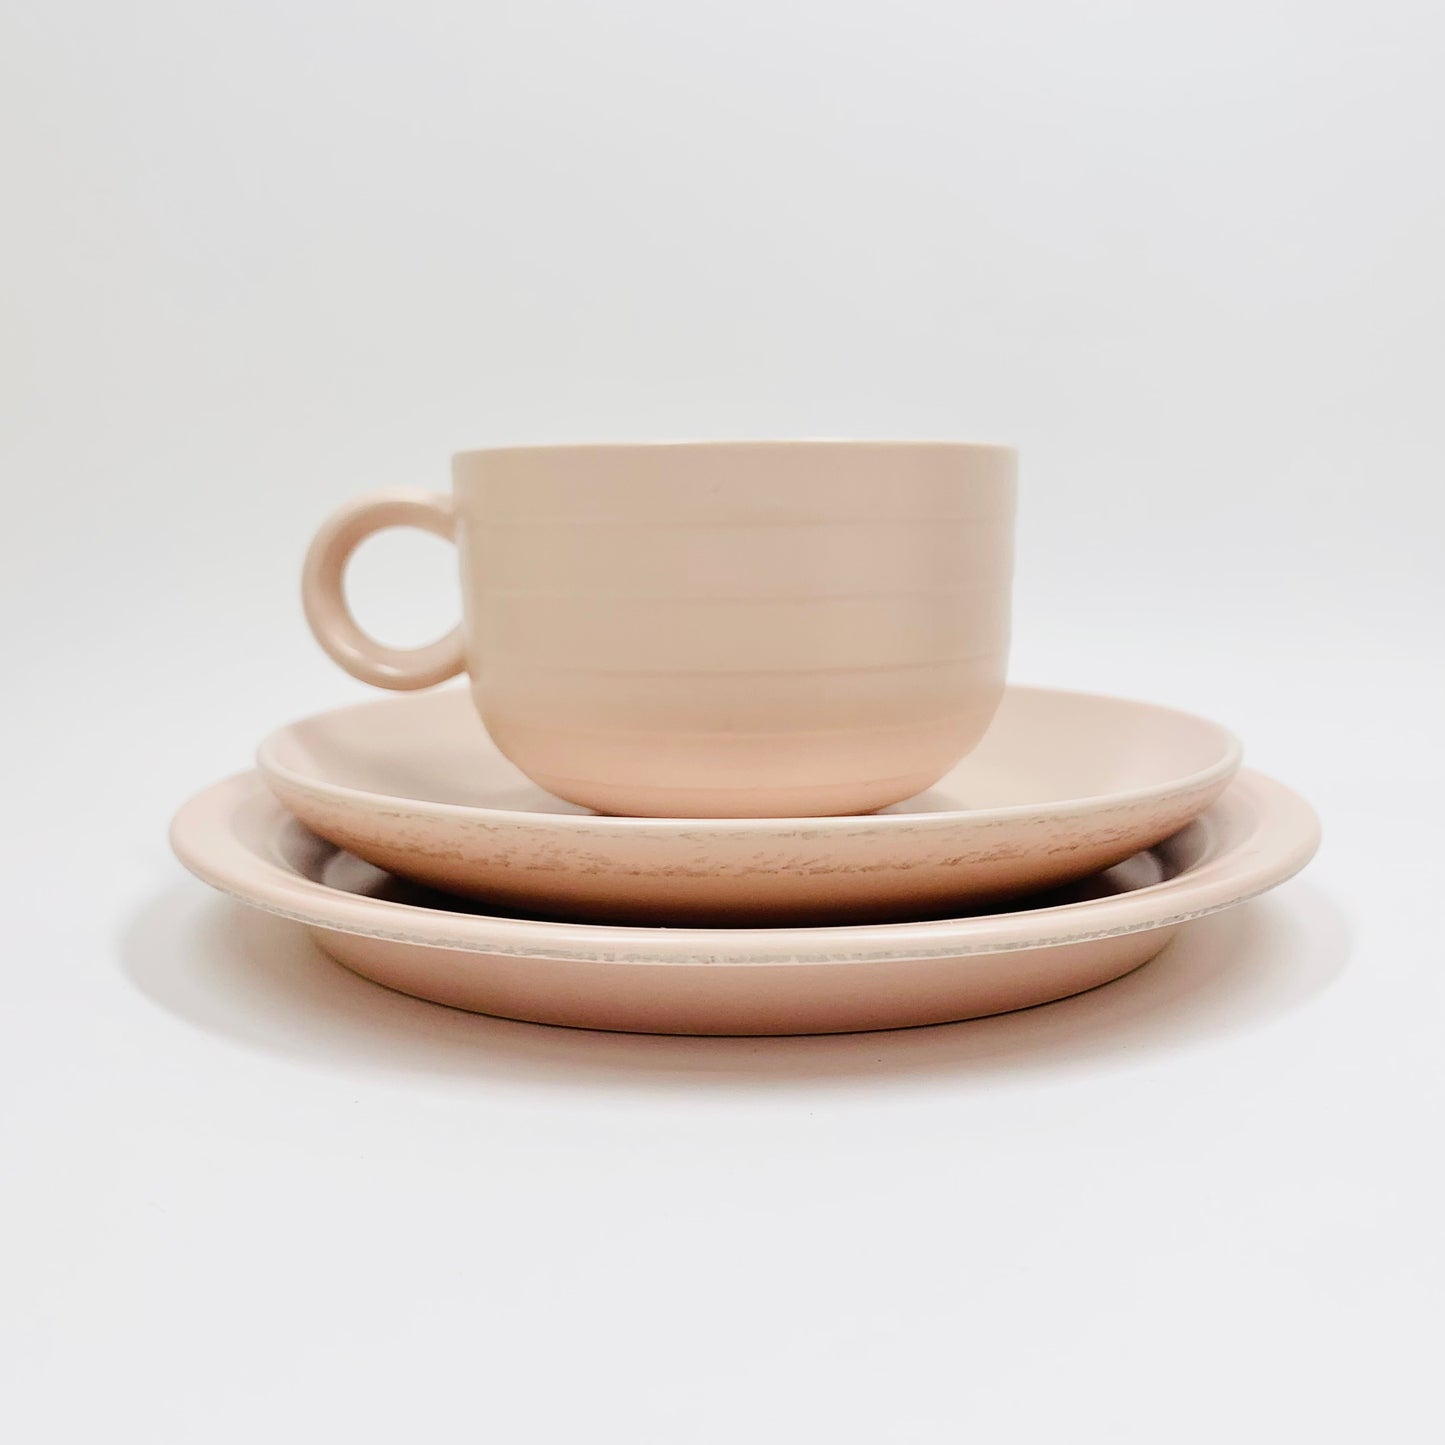 Rare 1980s pink porcelain coffee/tea set by Hornsea